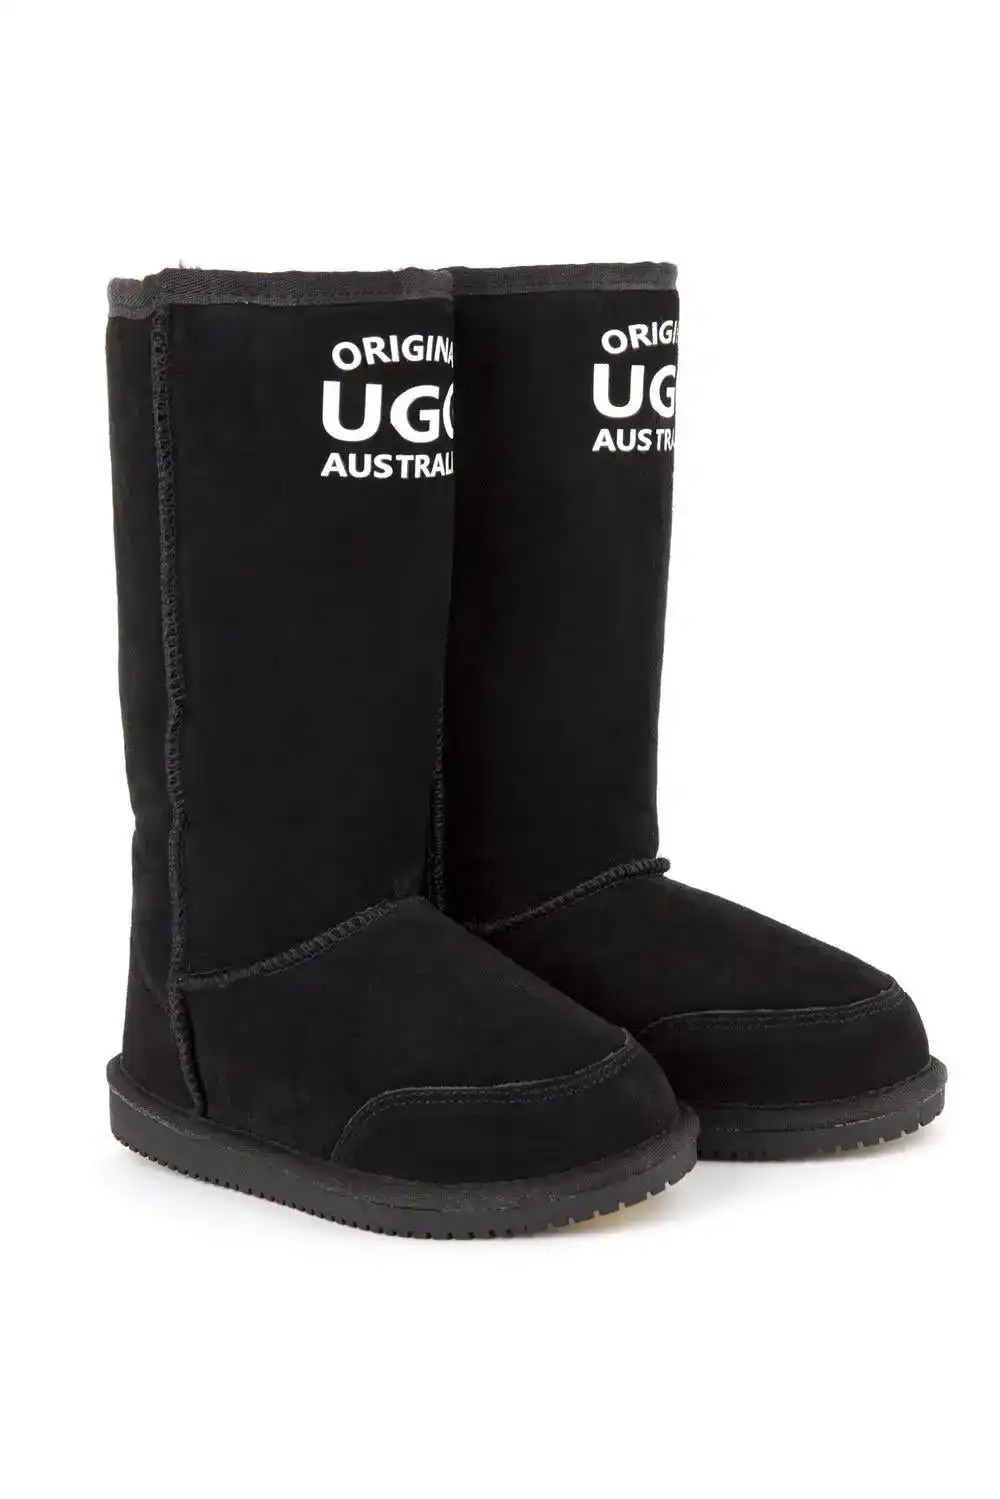 Original Ugg Australia Long Plain Black Print Boots